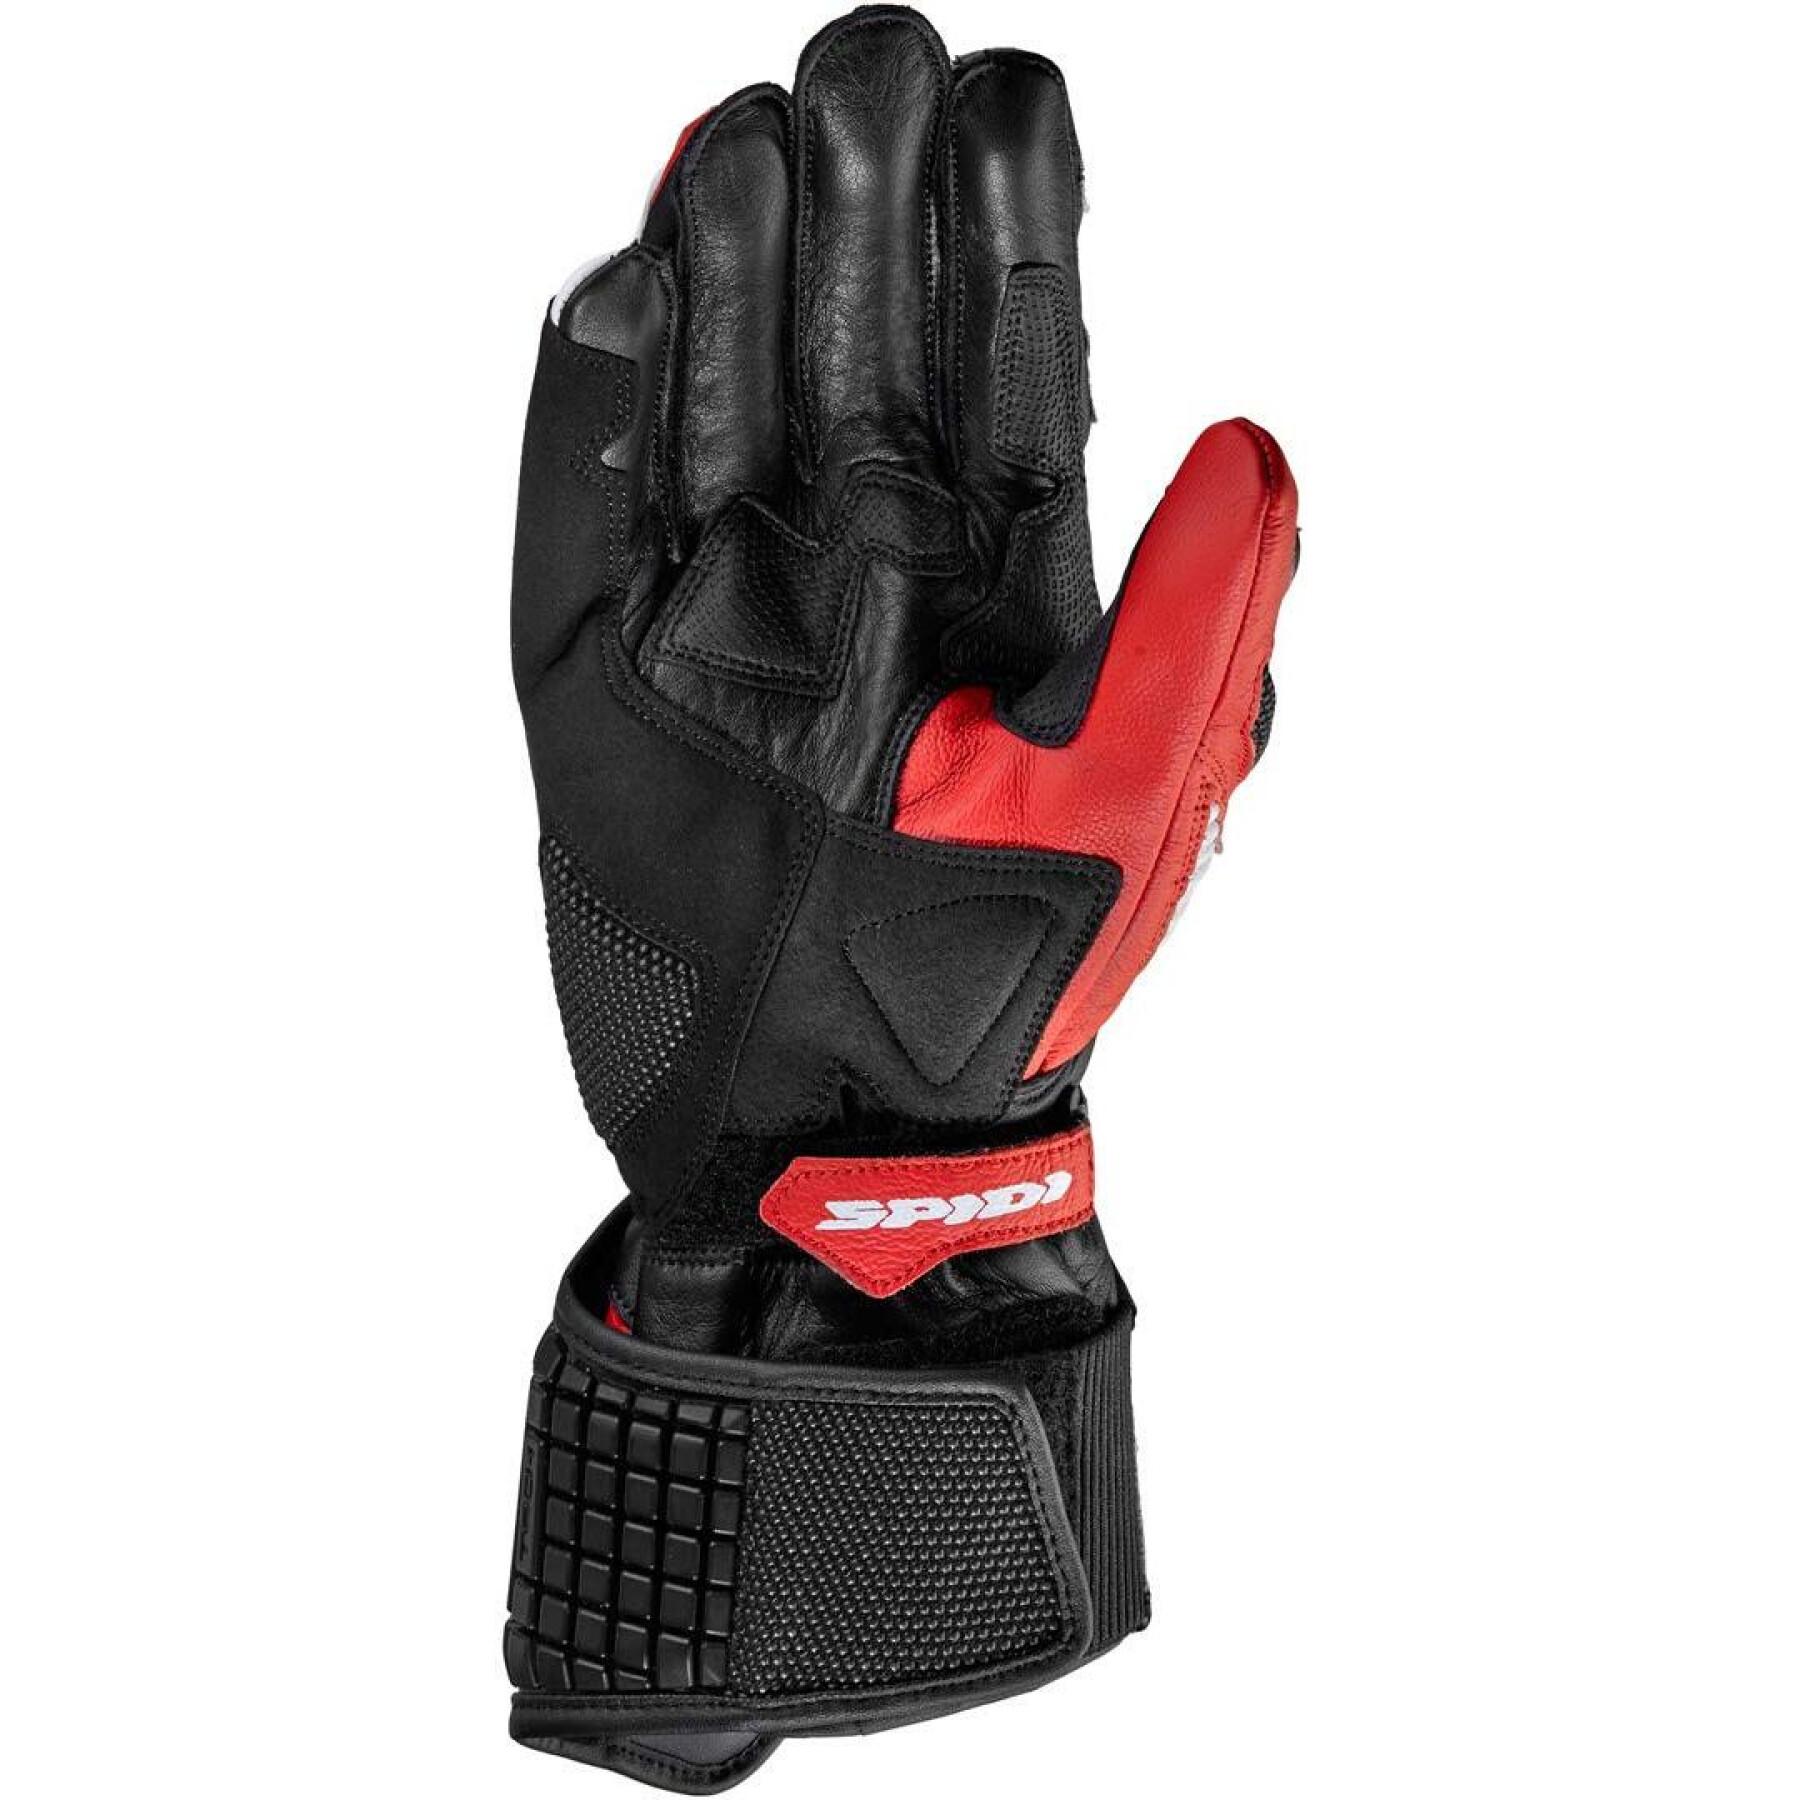 All season motorcycle gloves Spidi carbo 5